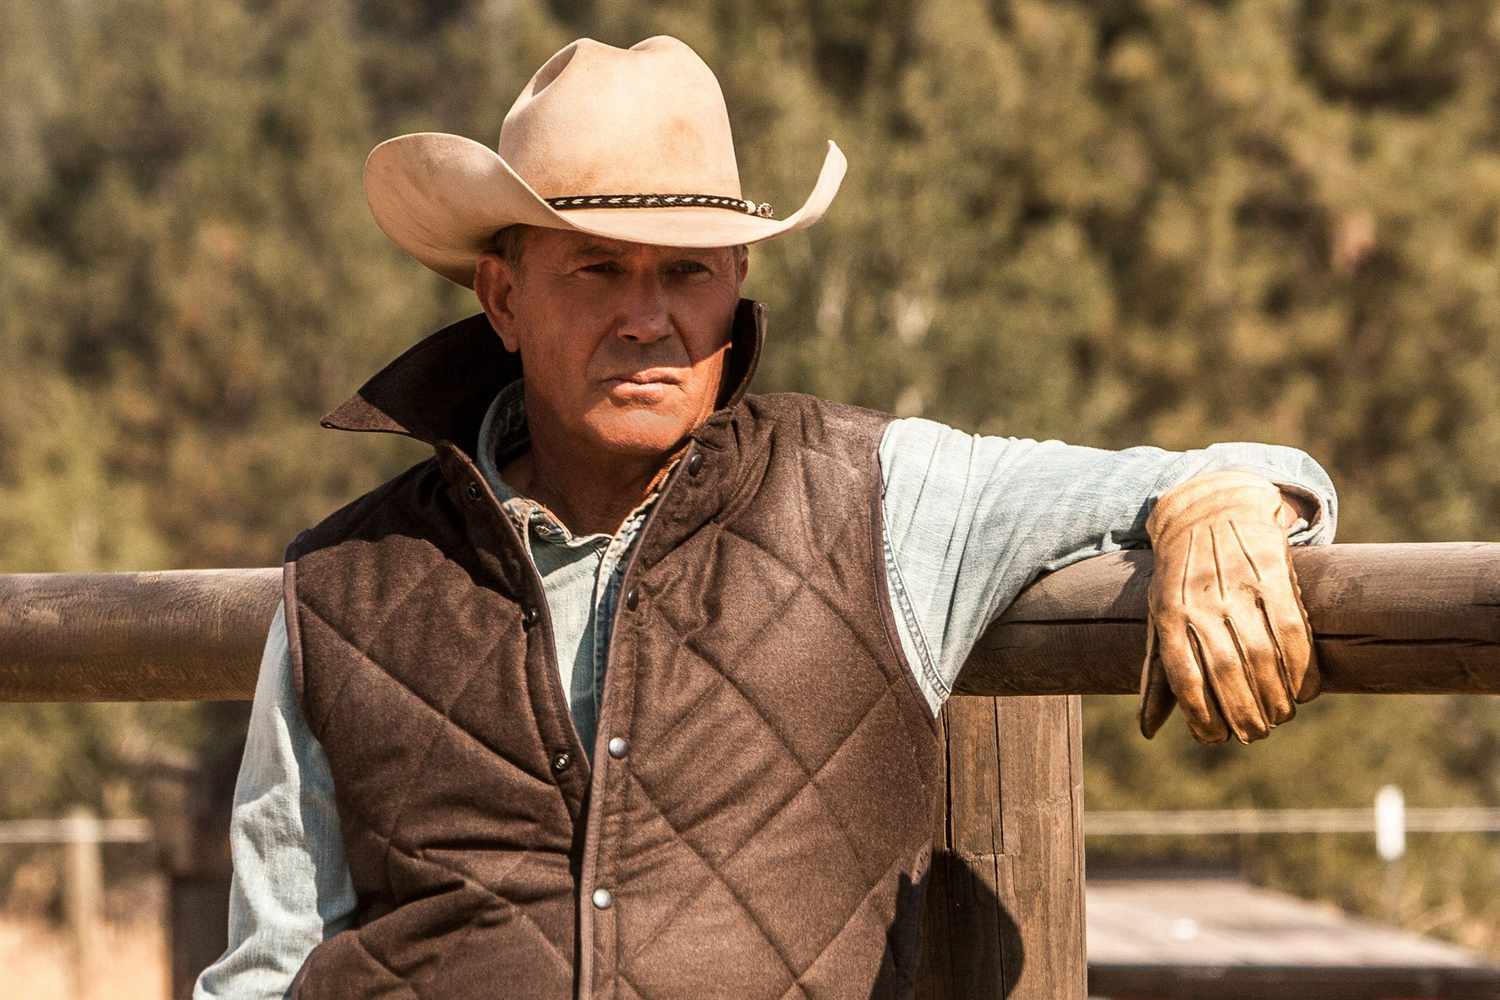 Kevin Costner prepares for war in 'Yellowstone' season 2 trailer.